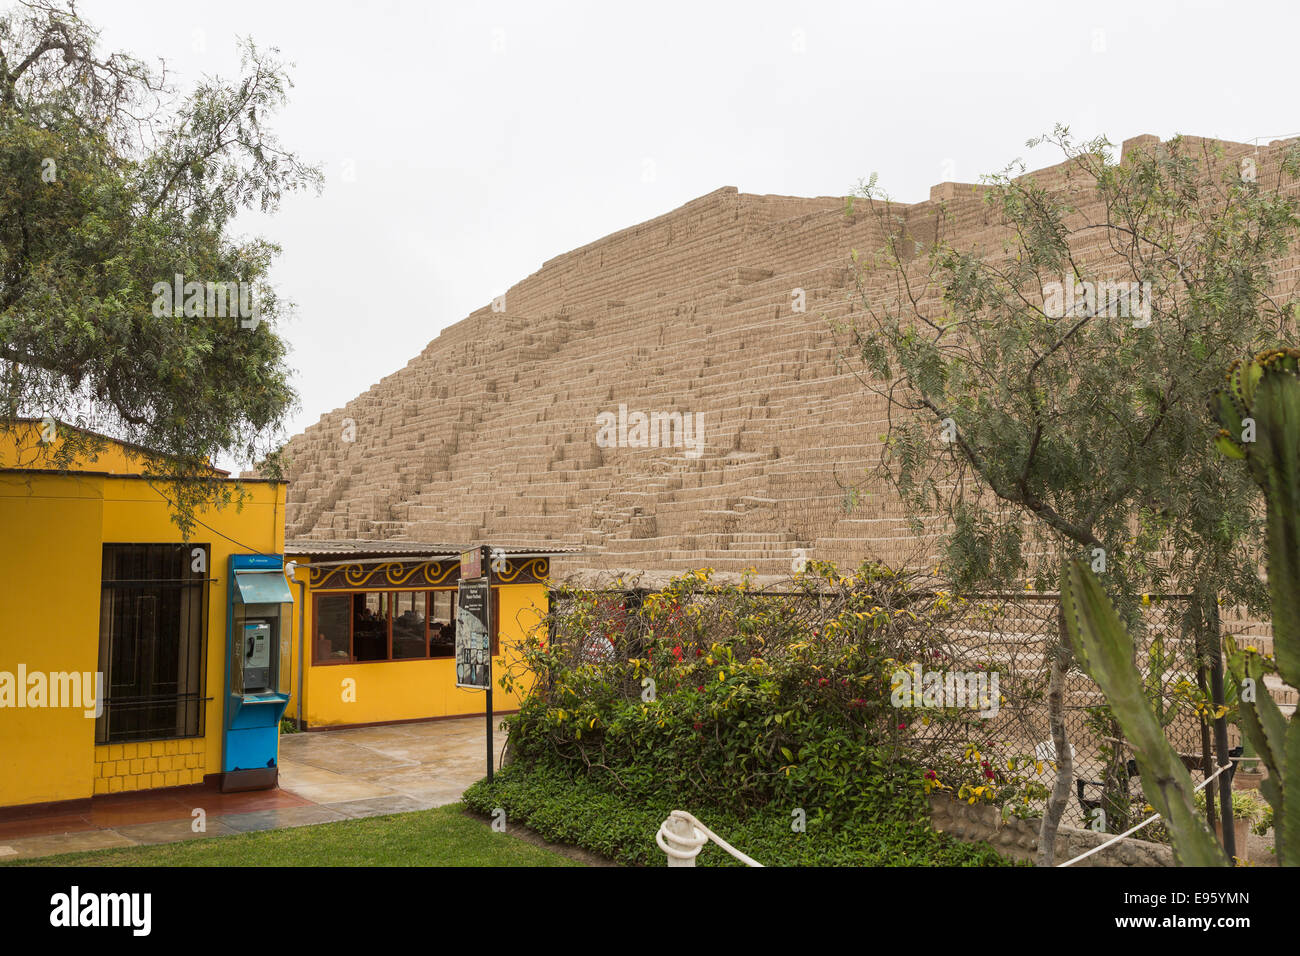 Sightseeing: the iconic pre-Inca Lima Culture adobe brick-built terraced pyramid at Huaca Pucllana or Huaca Juliana, Miraflores, Lima, Peru Stock Photo